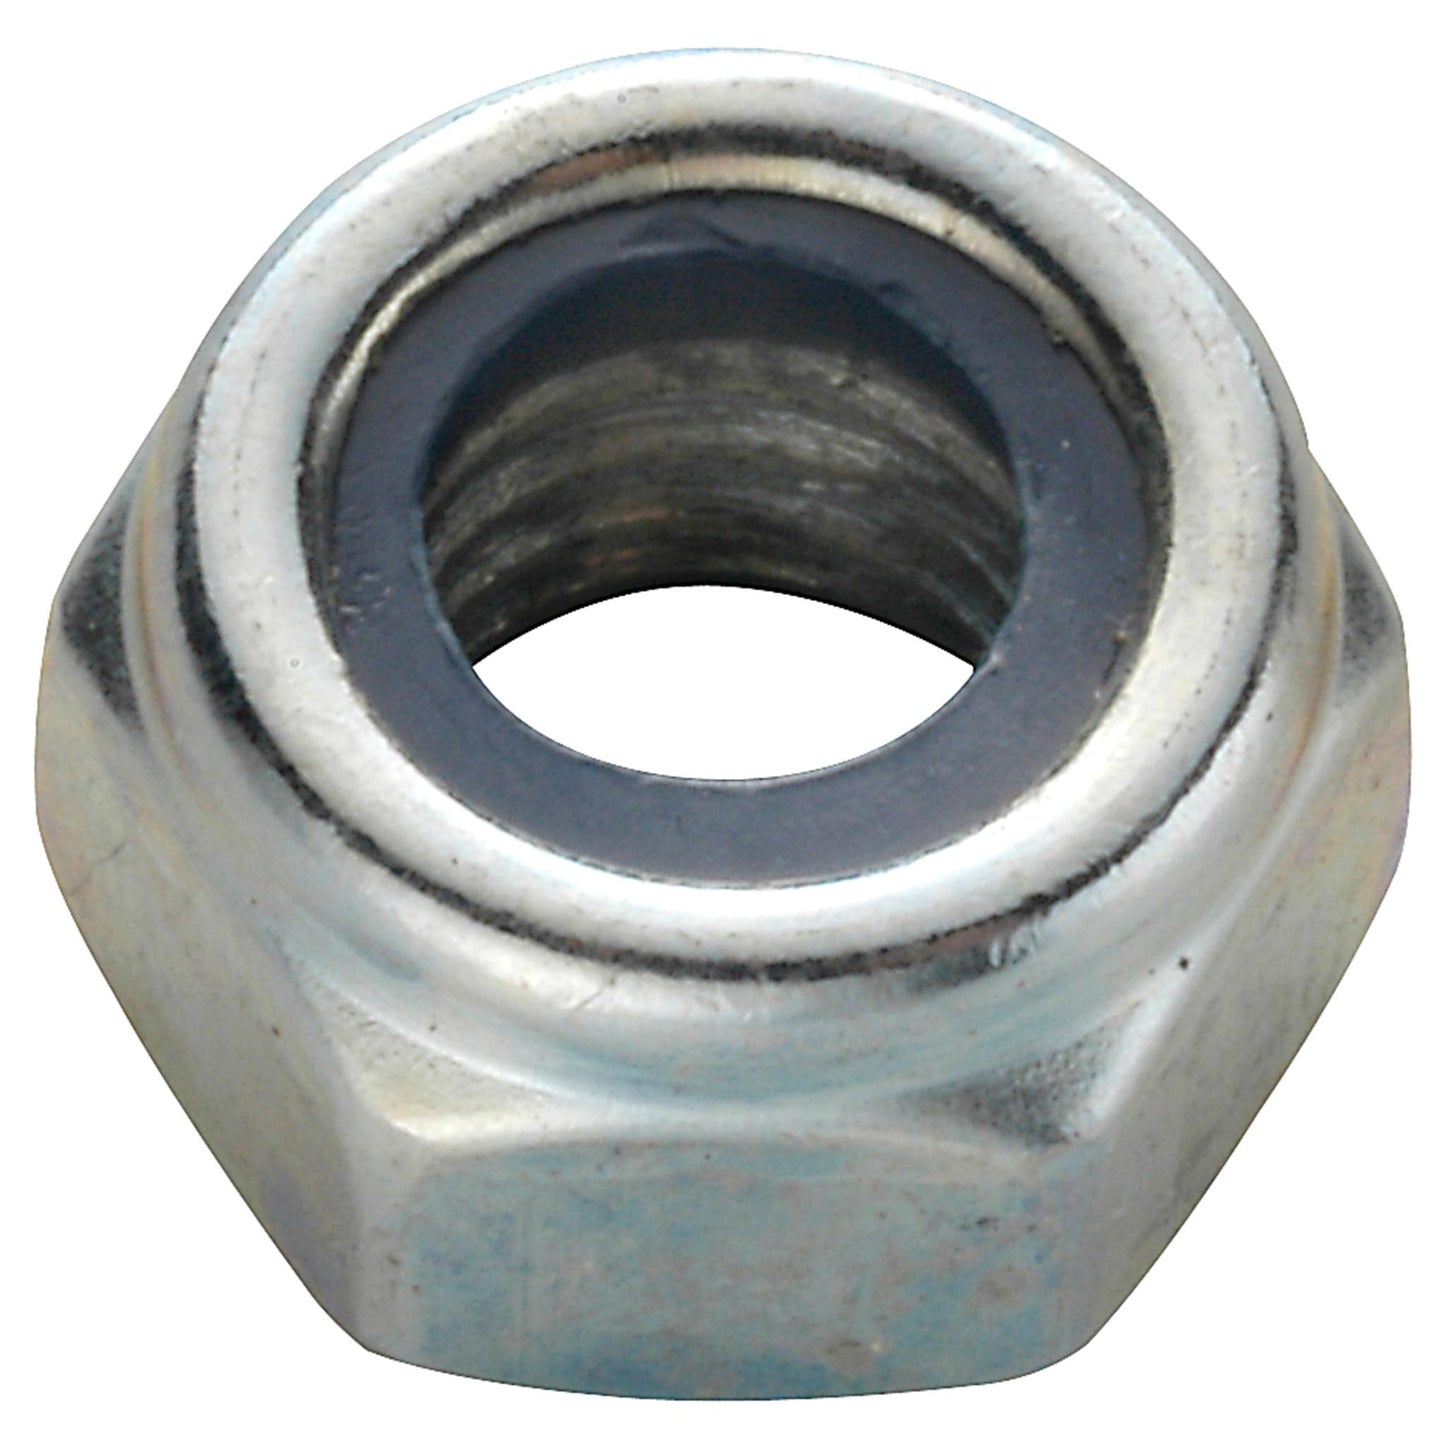 Lock nuts DIN 985 M 6 galvanized steel